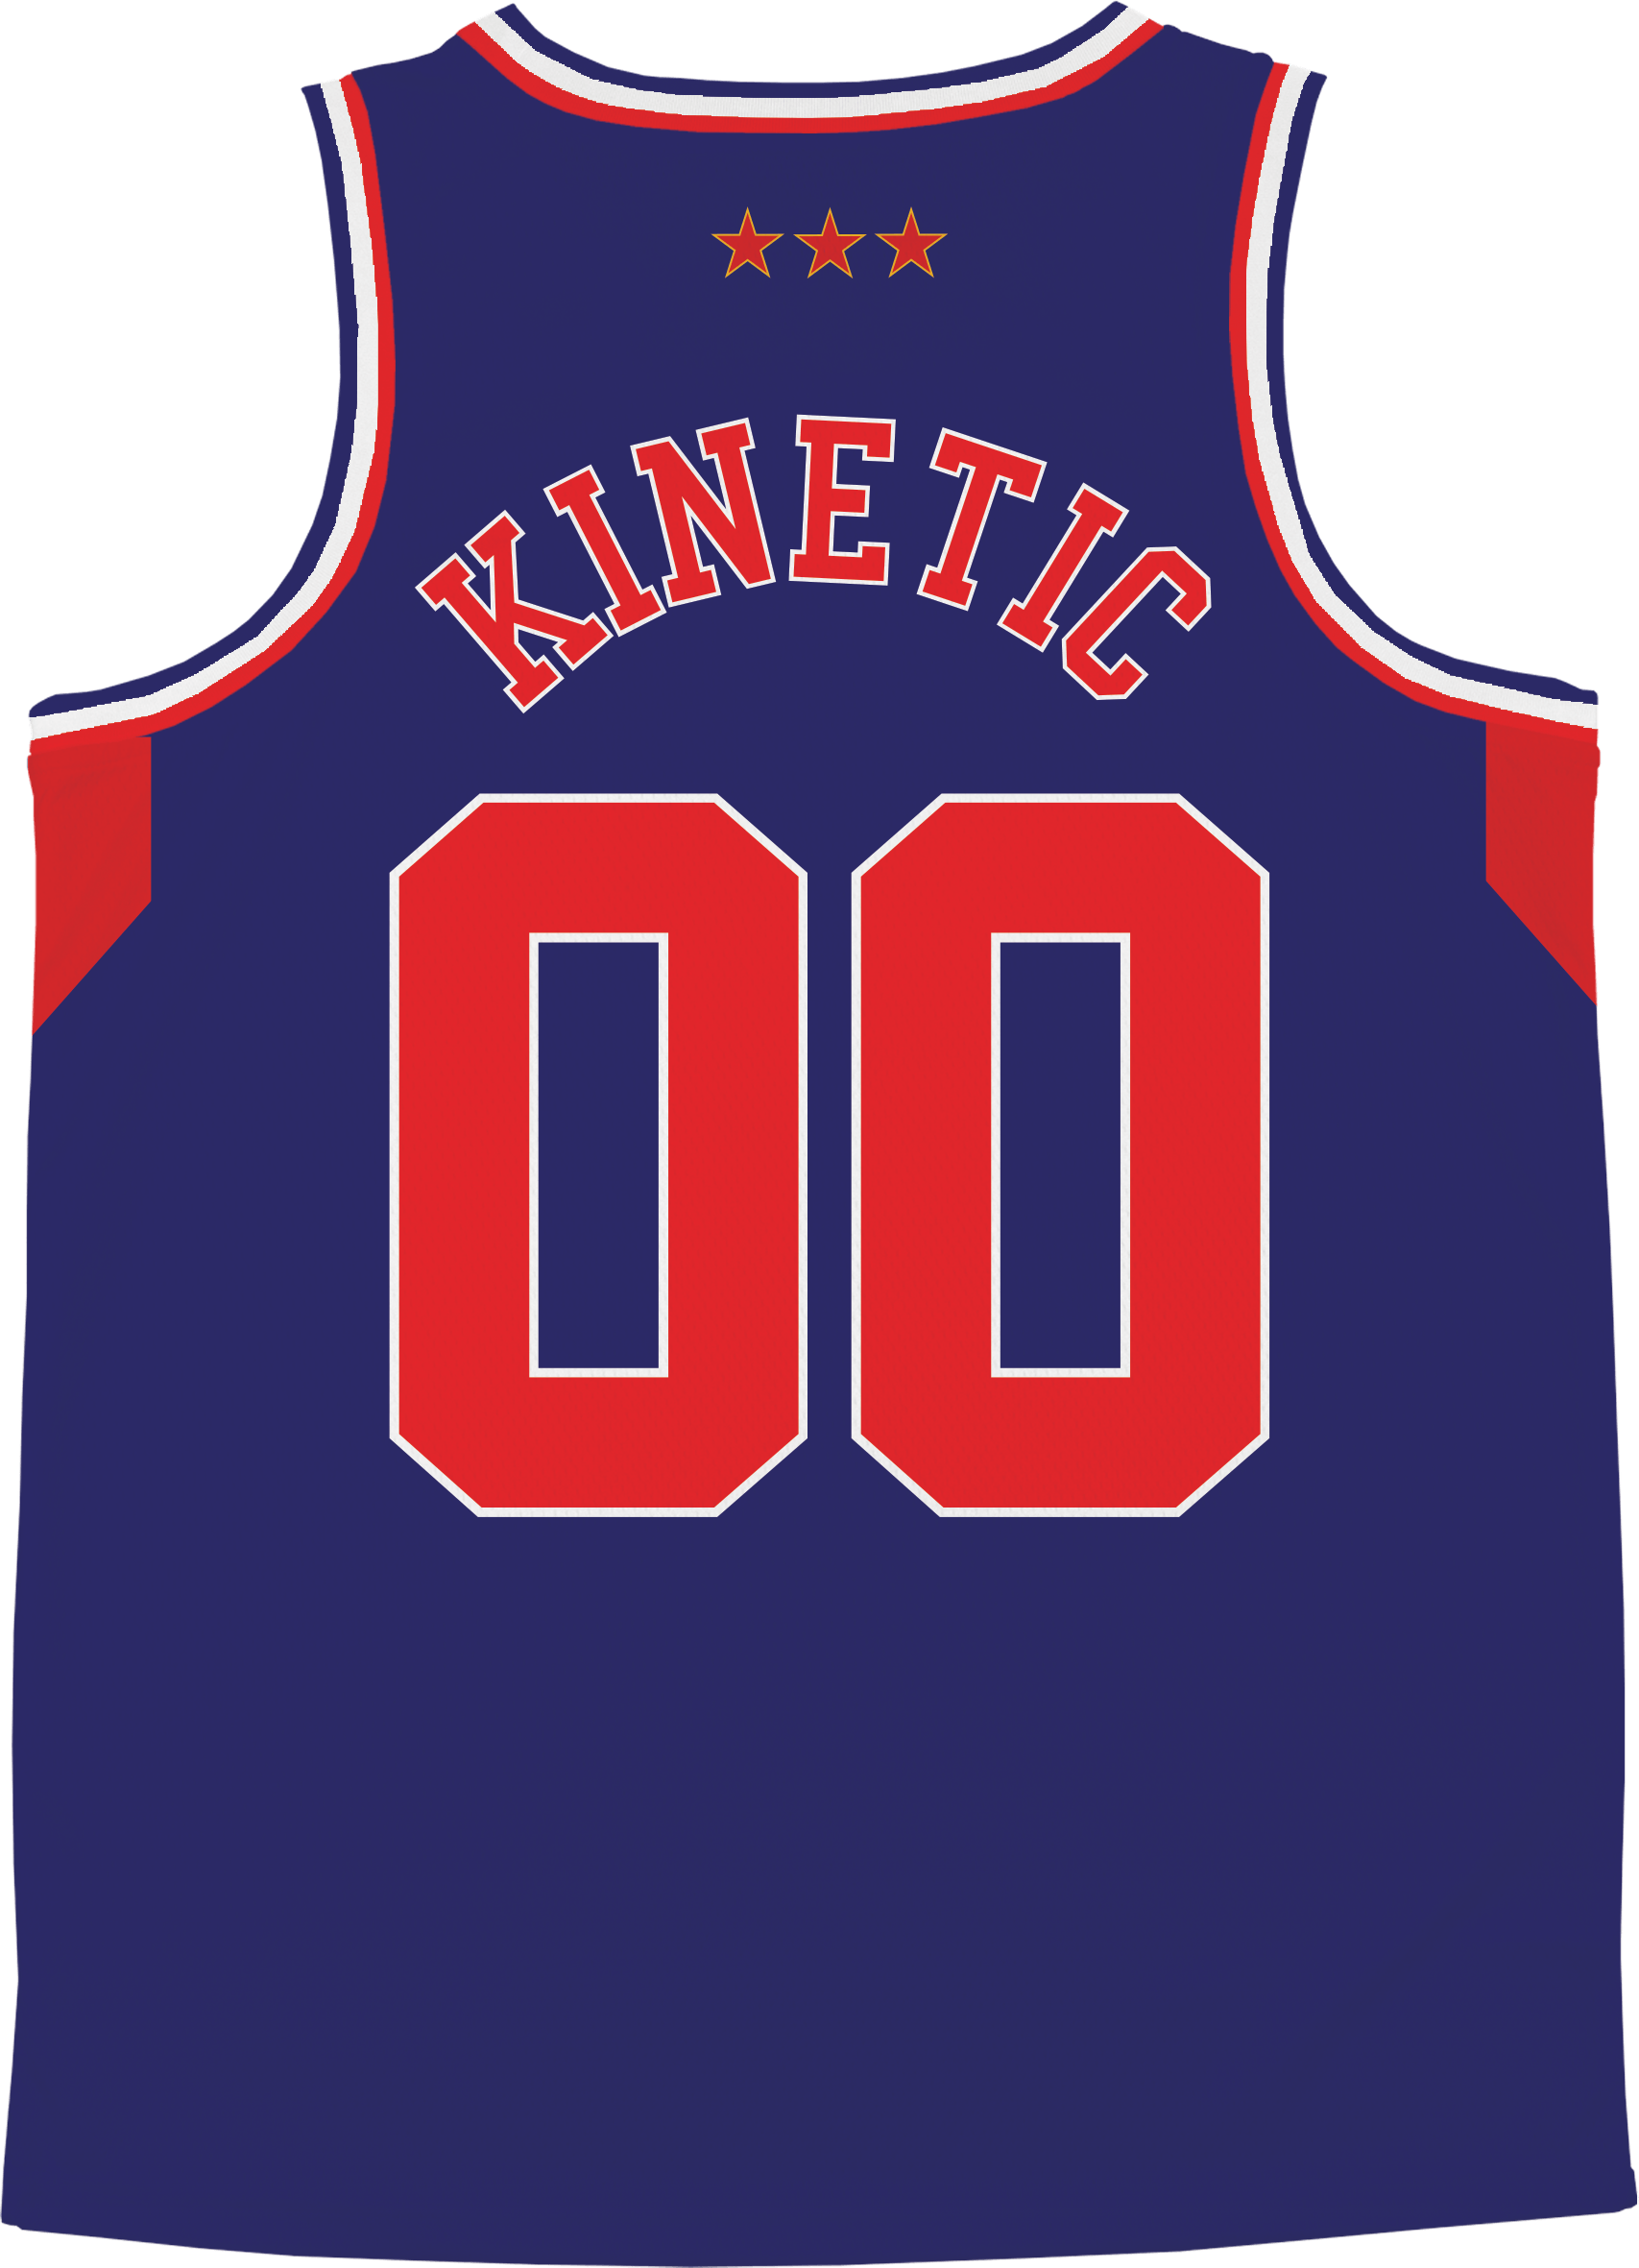 Sigma Chi - Retro Ballers Basketball Jersey - Kinetic Society